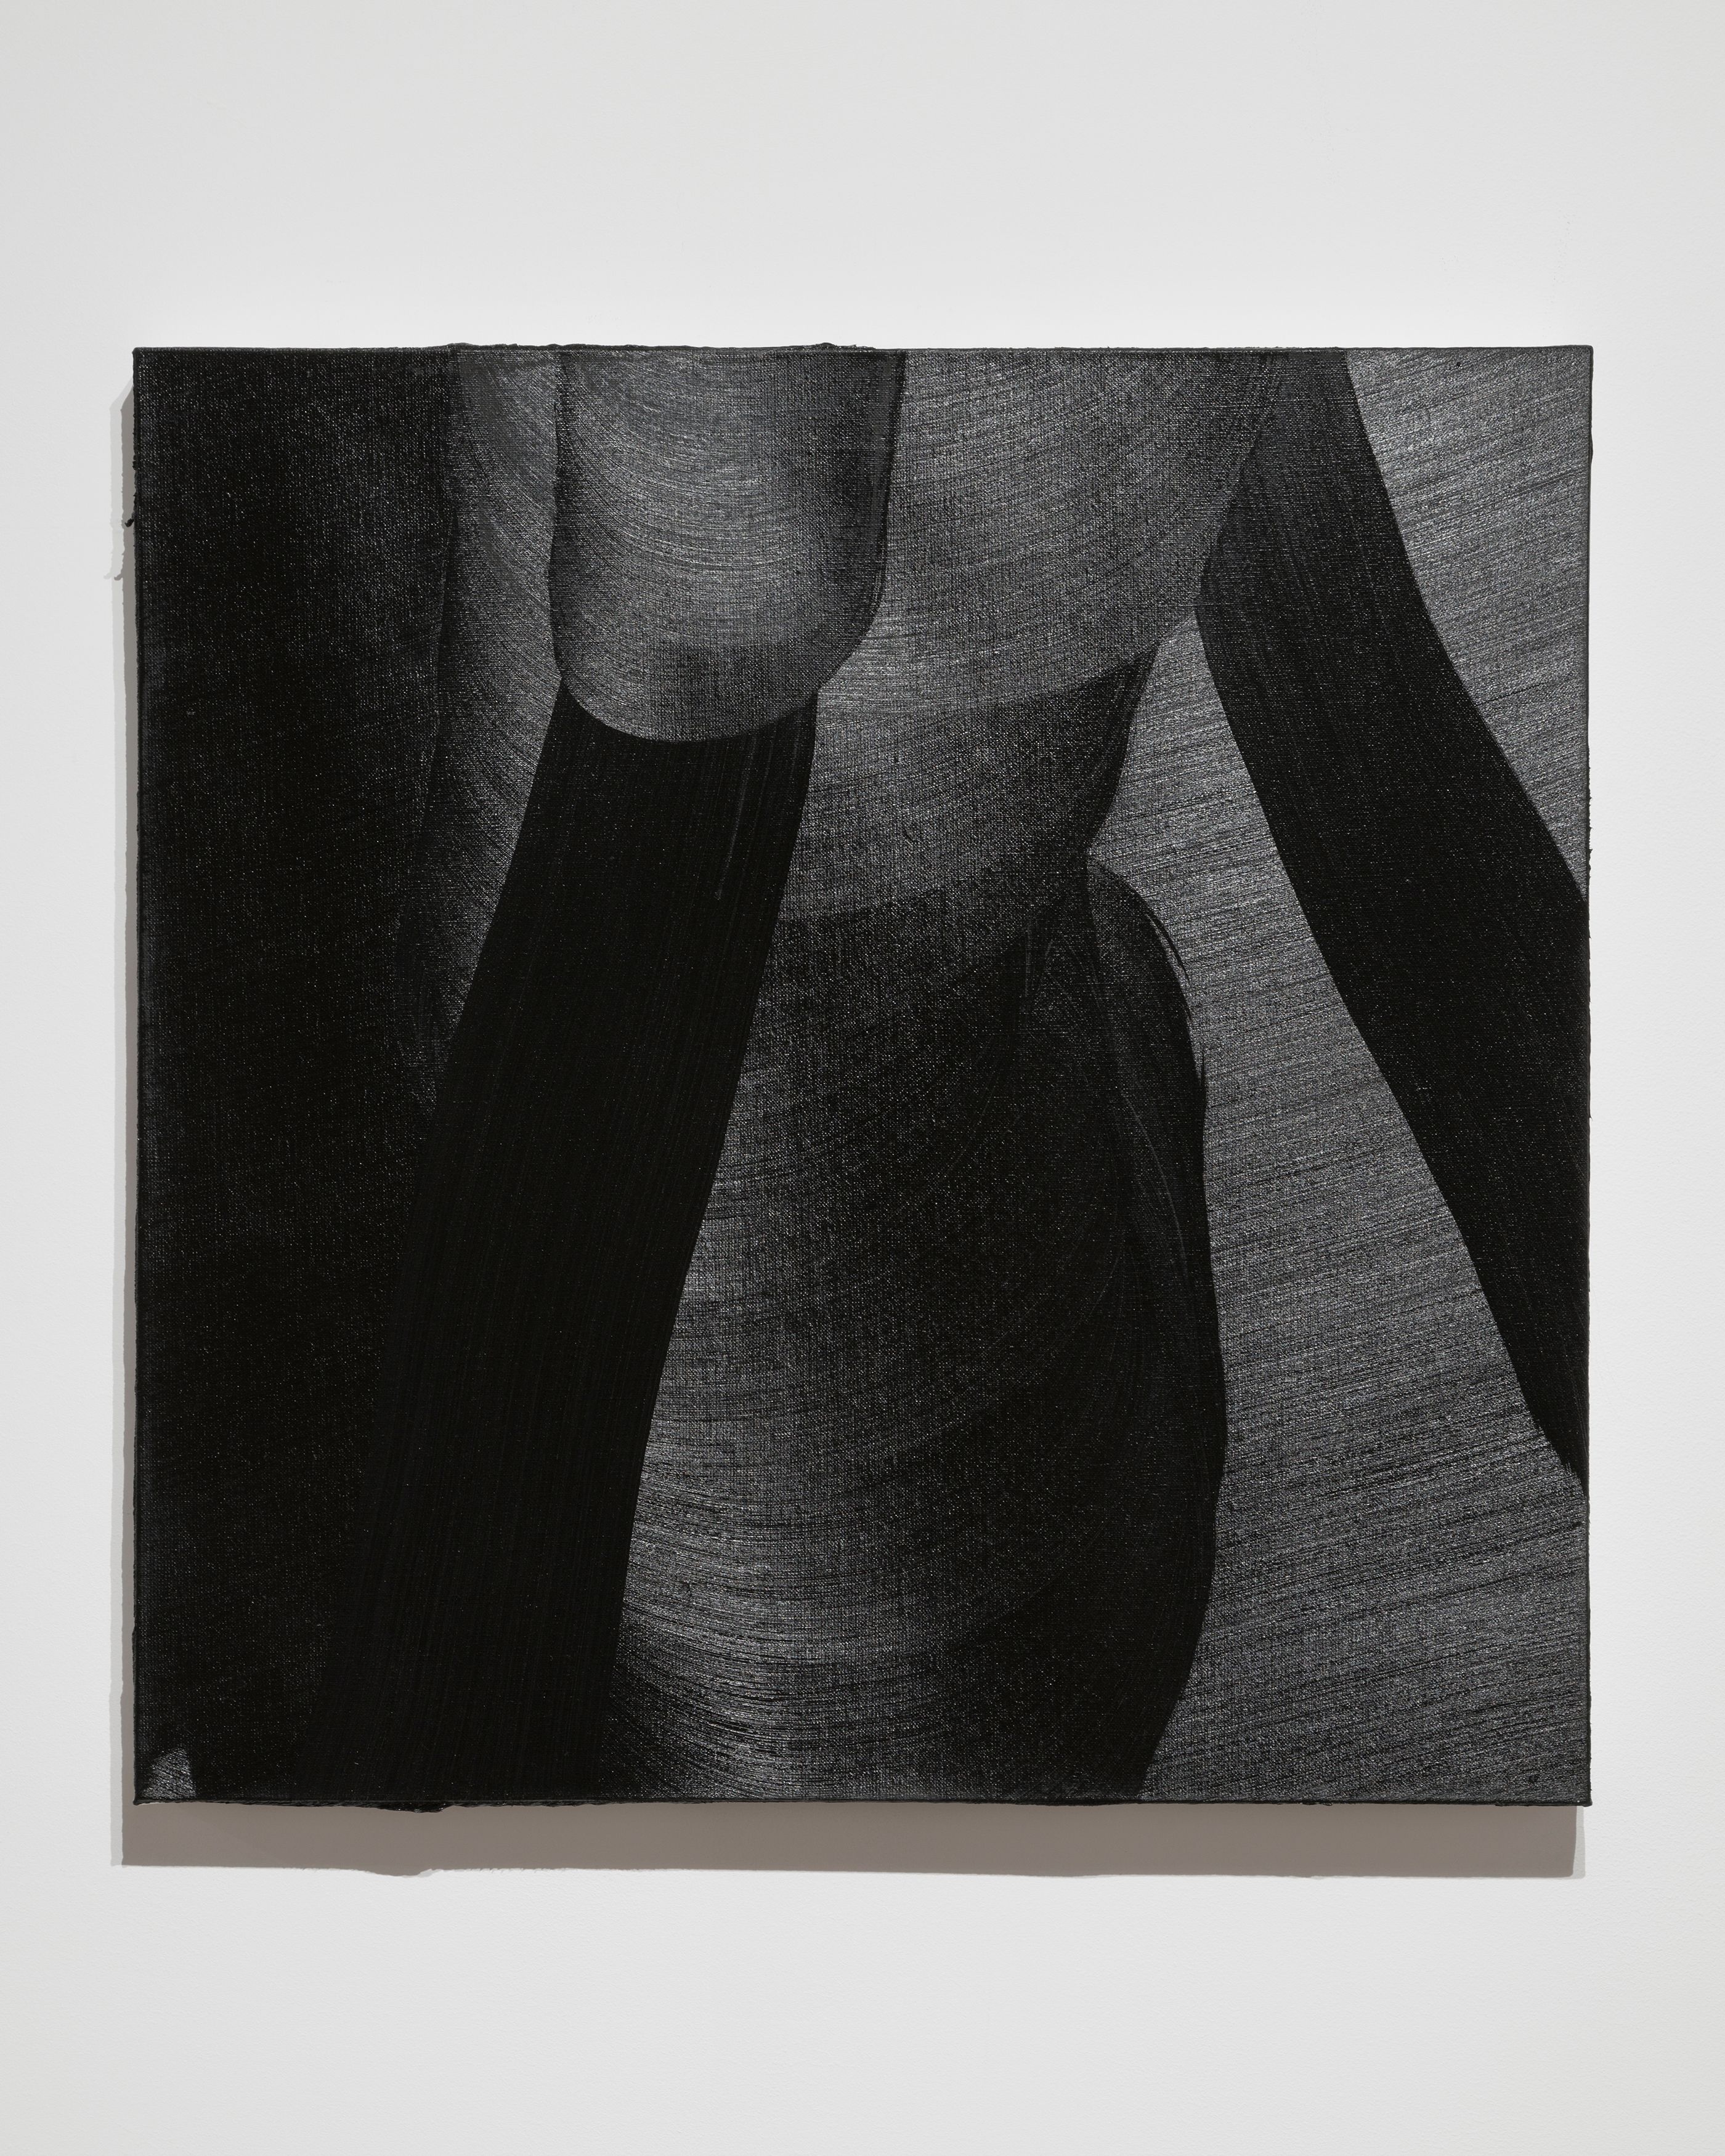 Rafal Bujnowski, White Dress (American Night), 2021, oil on canvas, 66 x 66 x 3 cm (26 x 26 x 1 1/8 in.)